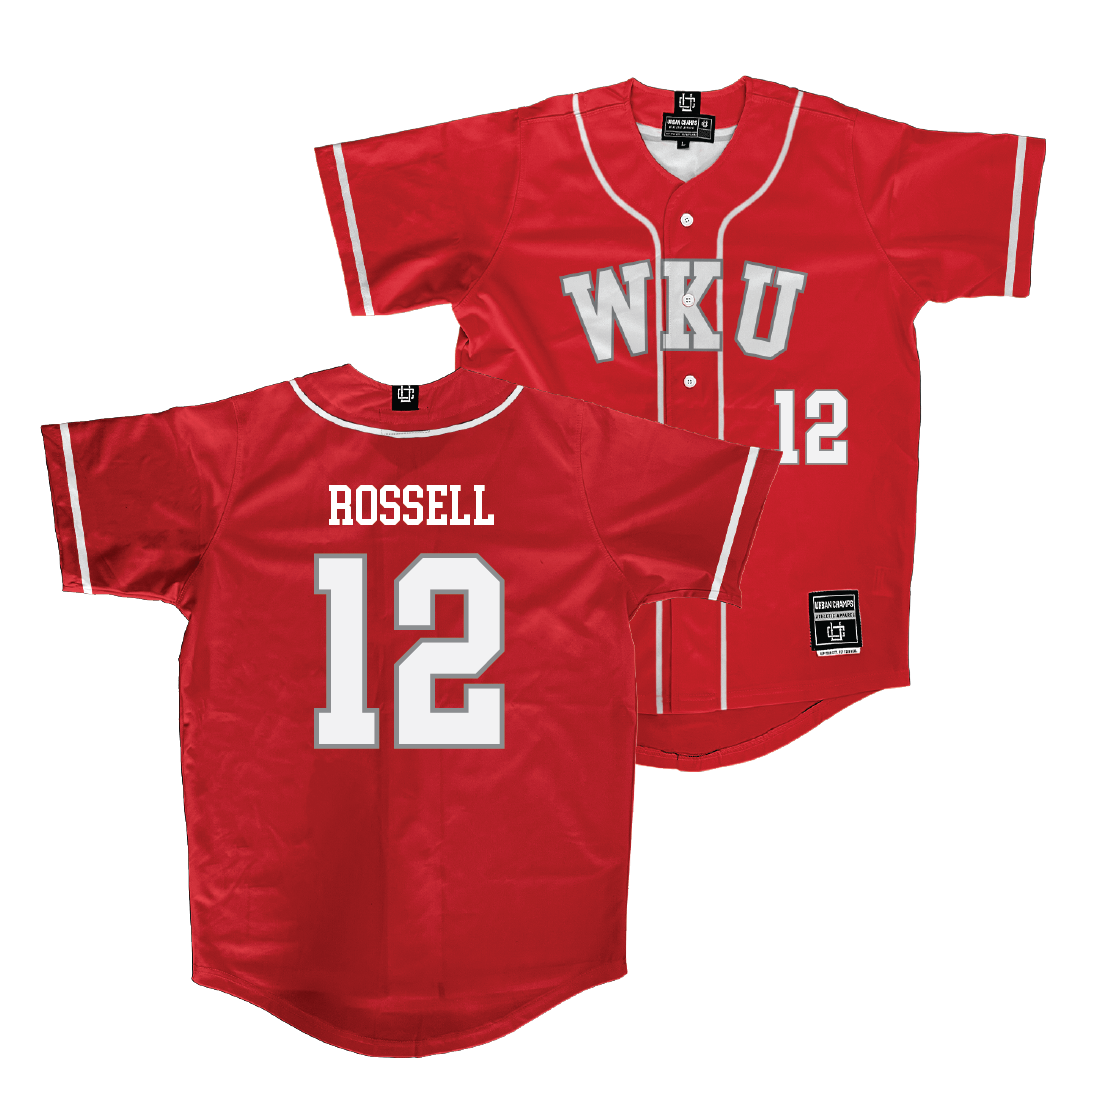 WKU Baseball Red Jersey - Elliott Rossell | #12